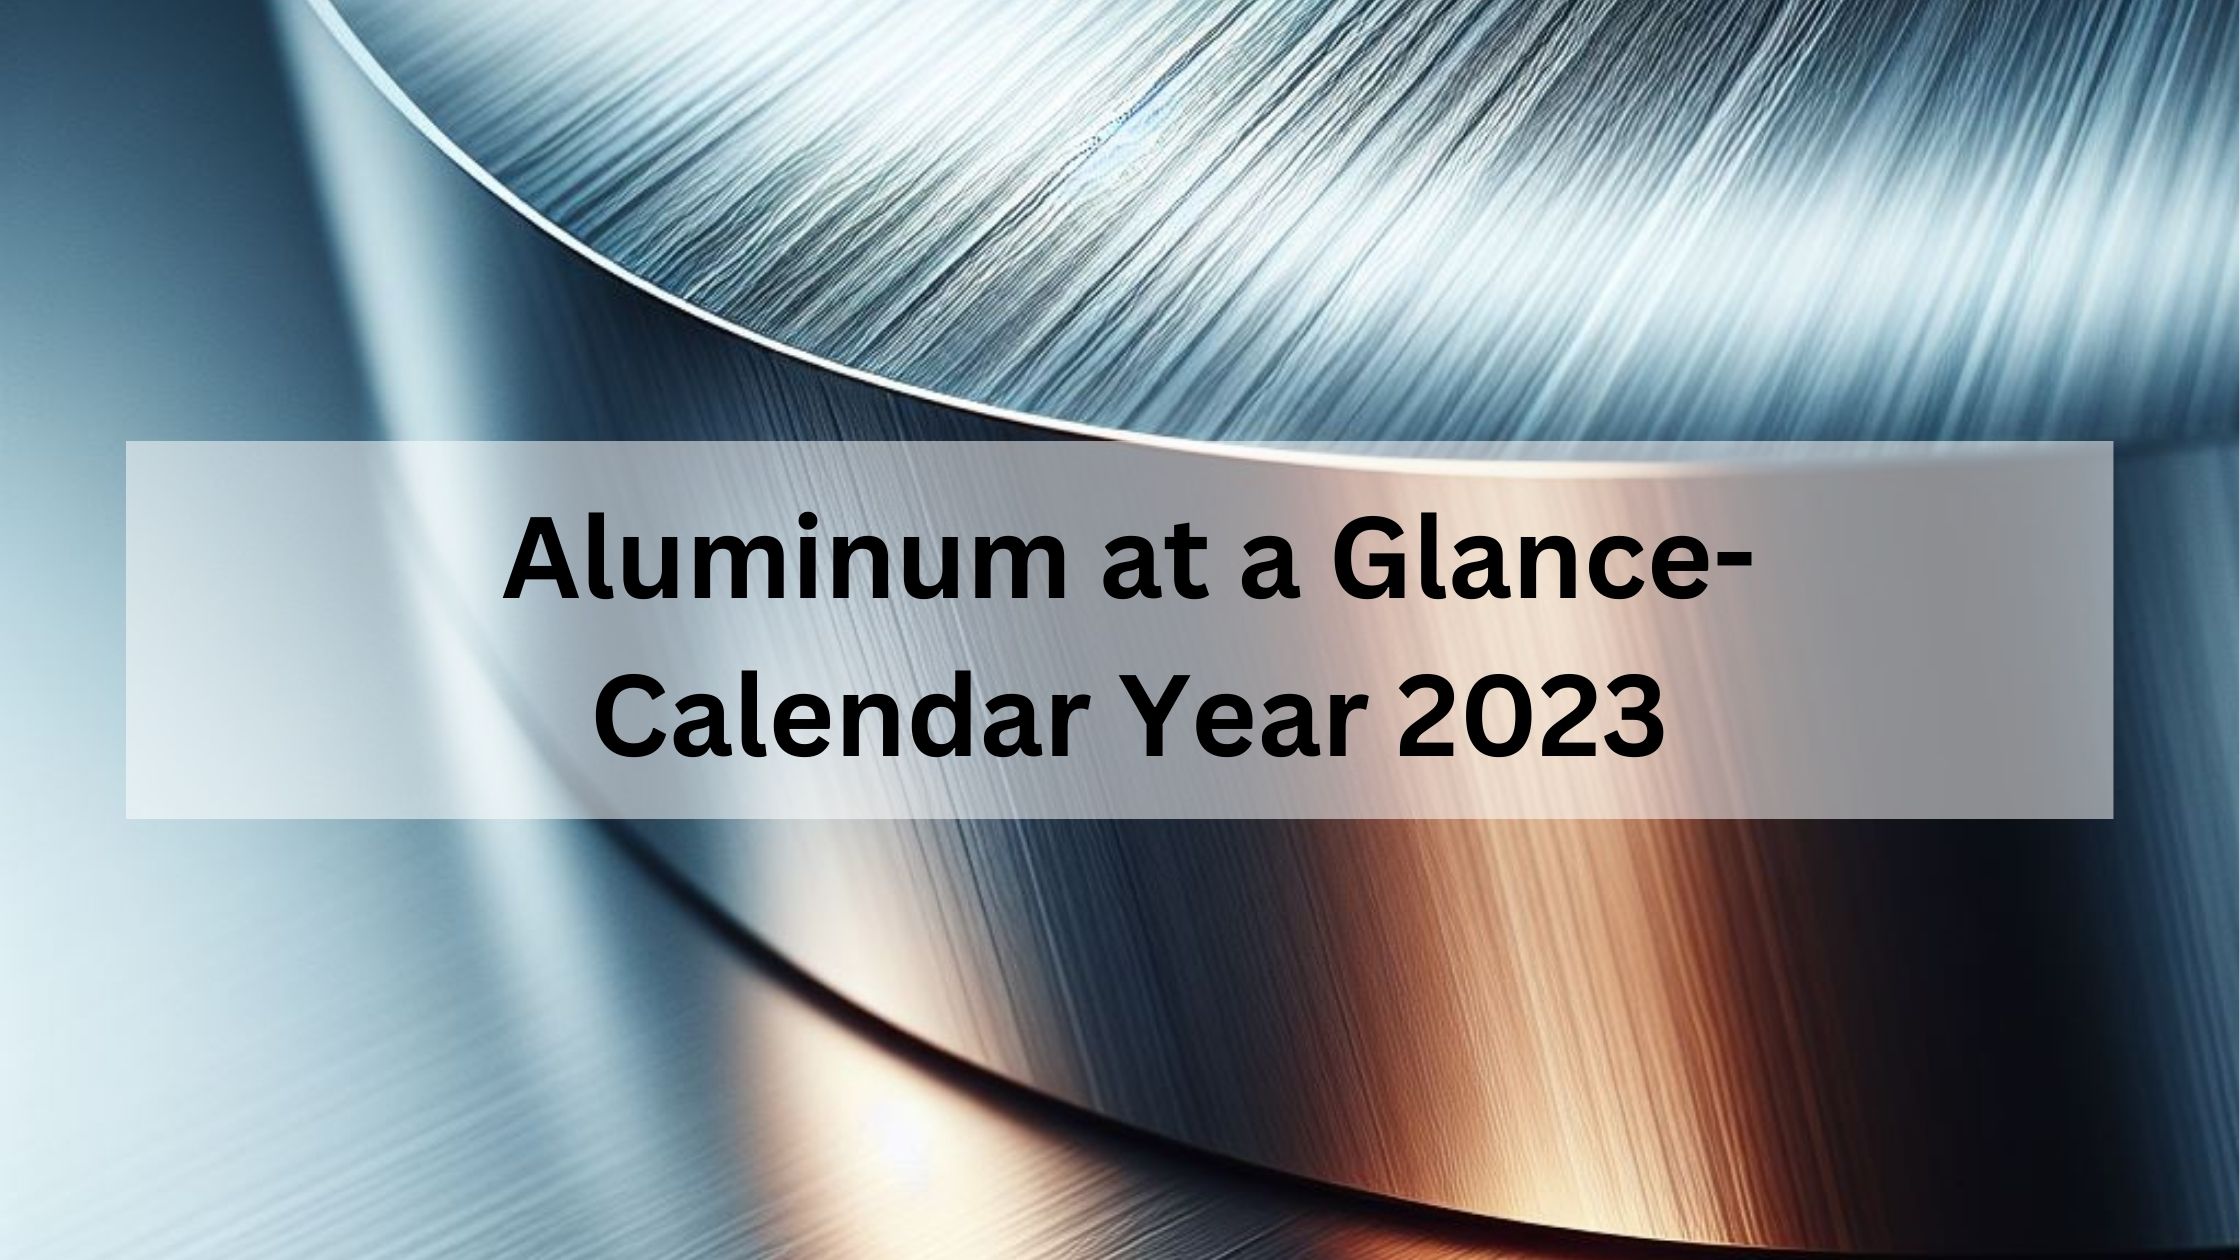 Aluminum at a Glance-Calendar Year 2023